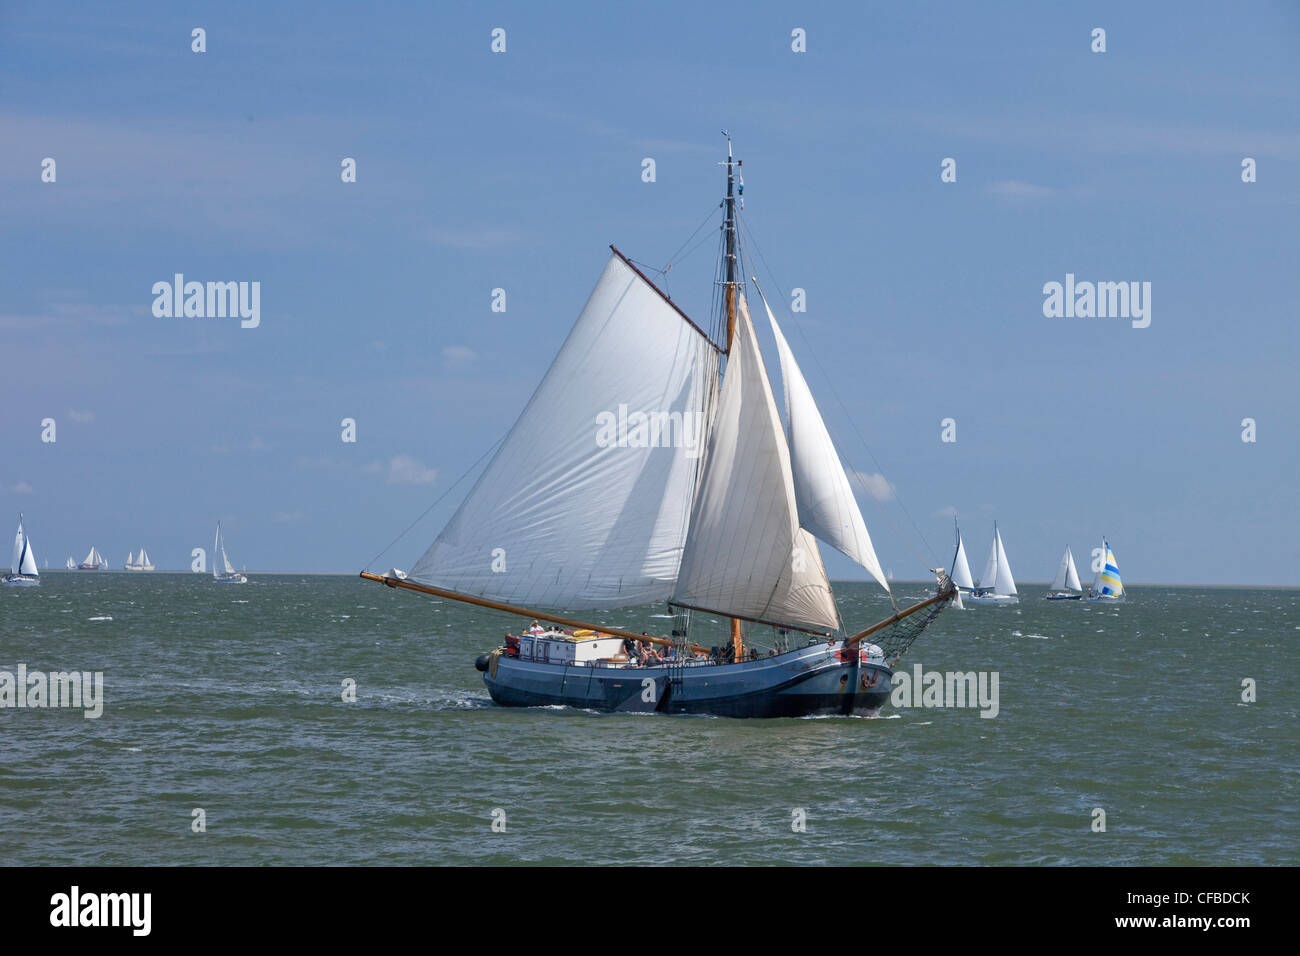 Holland, Europa Paesi Bassi, nave, barca, navi, barche a vela, mare Foto Stock